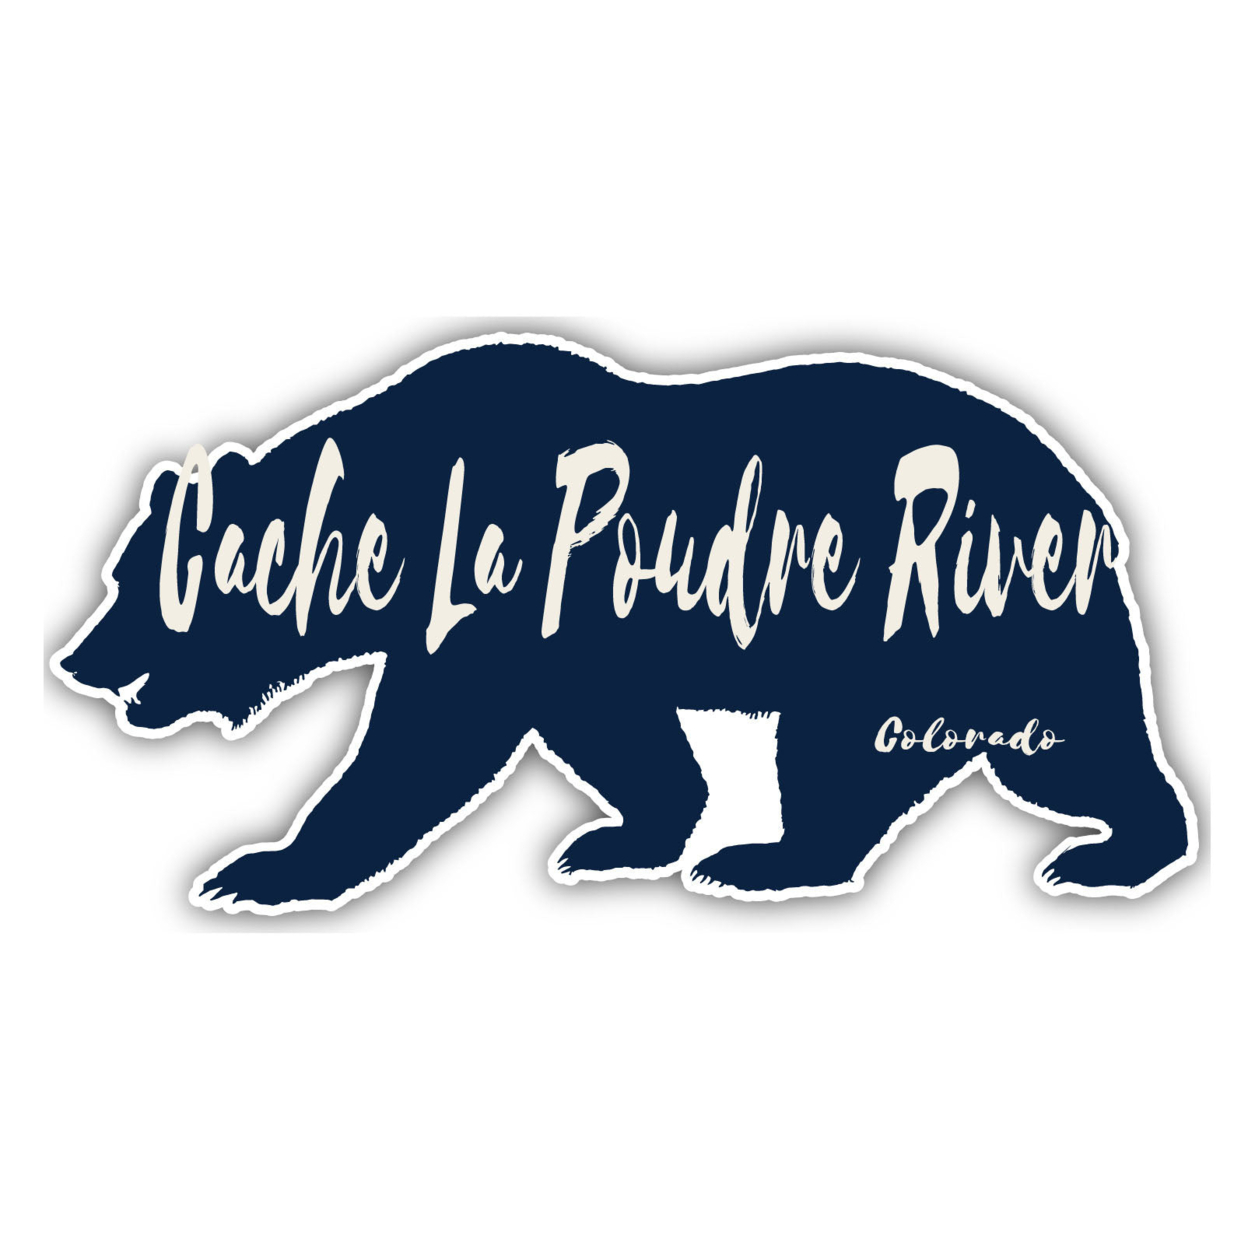 Cache La Poudre River Colorado Souvenir Decorative Stickers (Choose Theme And Size) - Single Unit, 4-Inch, Bear